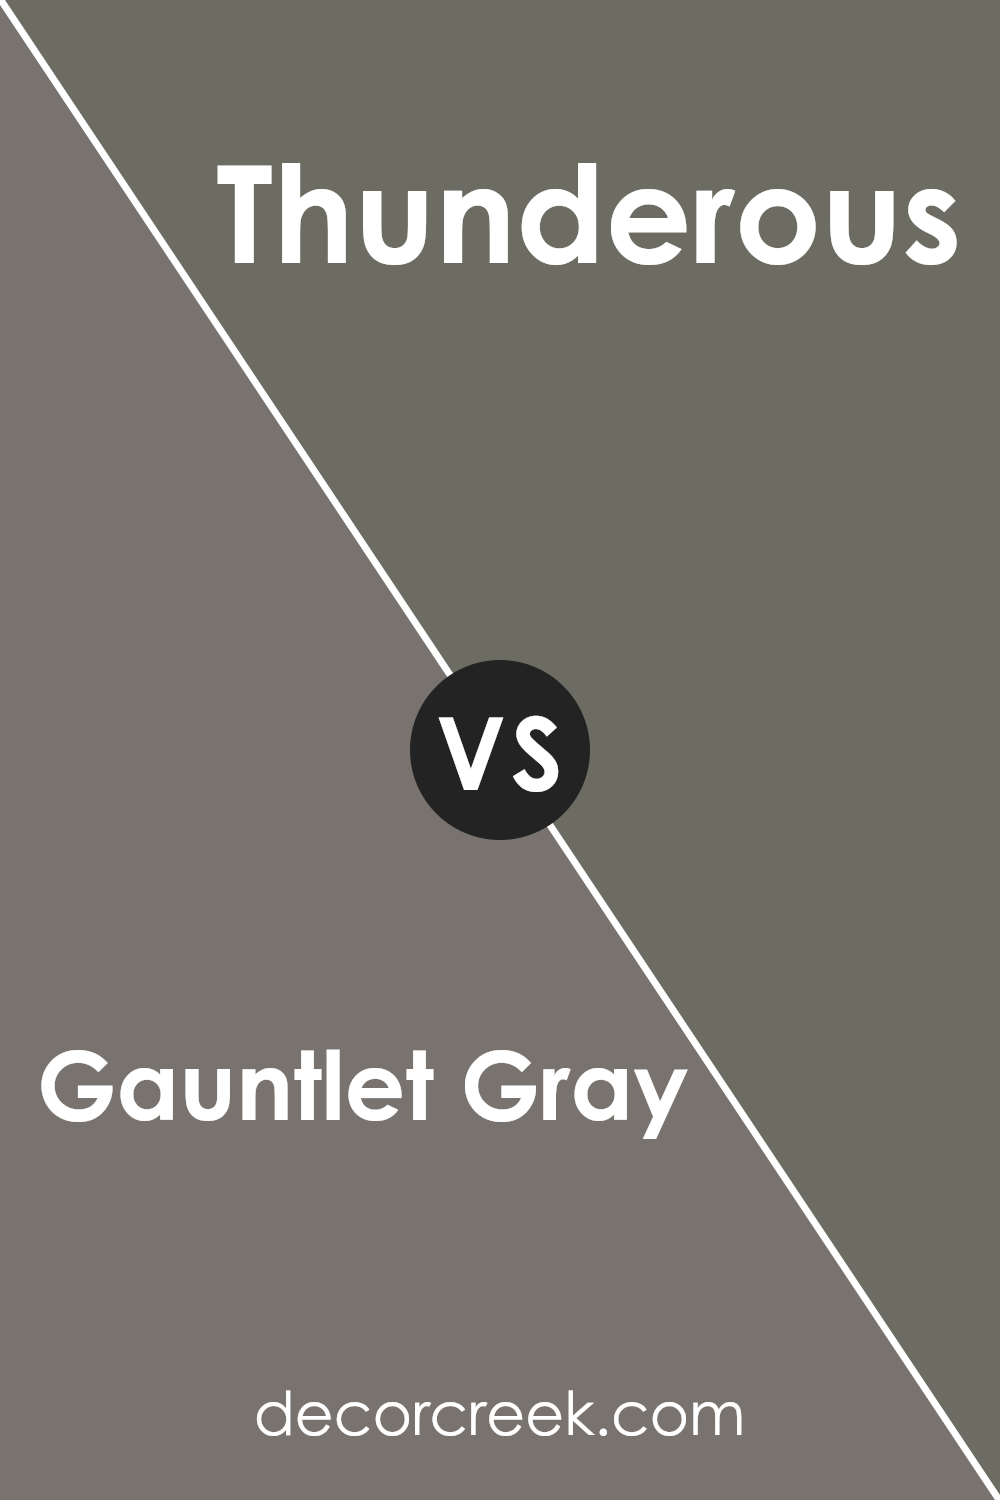 gauntlet_gray_sw_7019_vs_thunderous_sw_6201